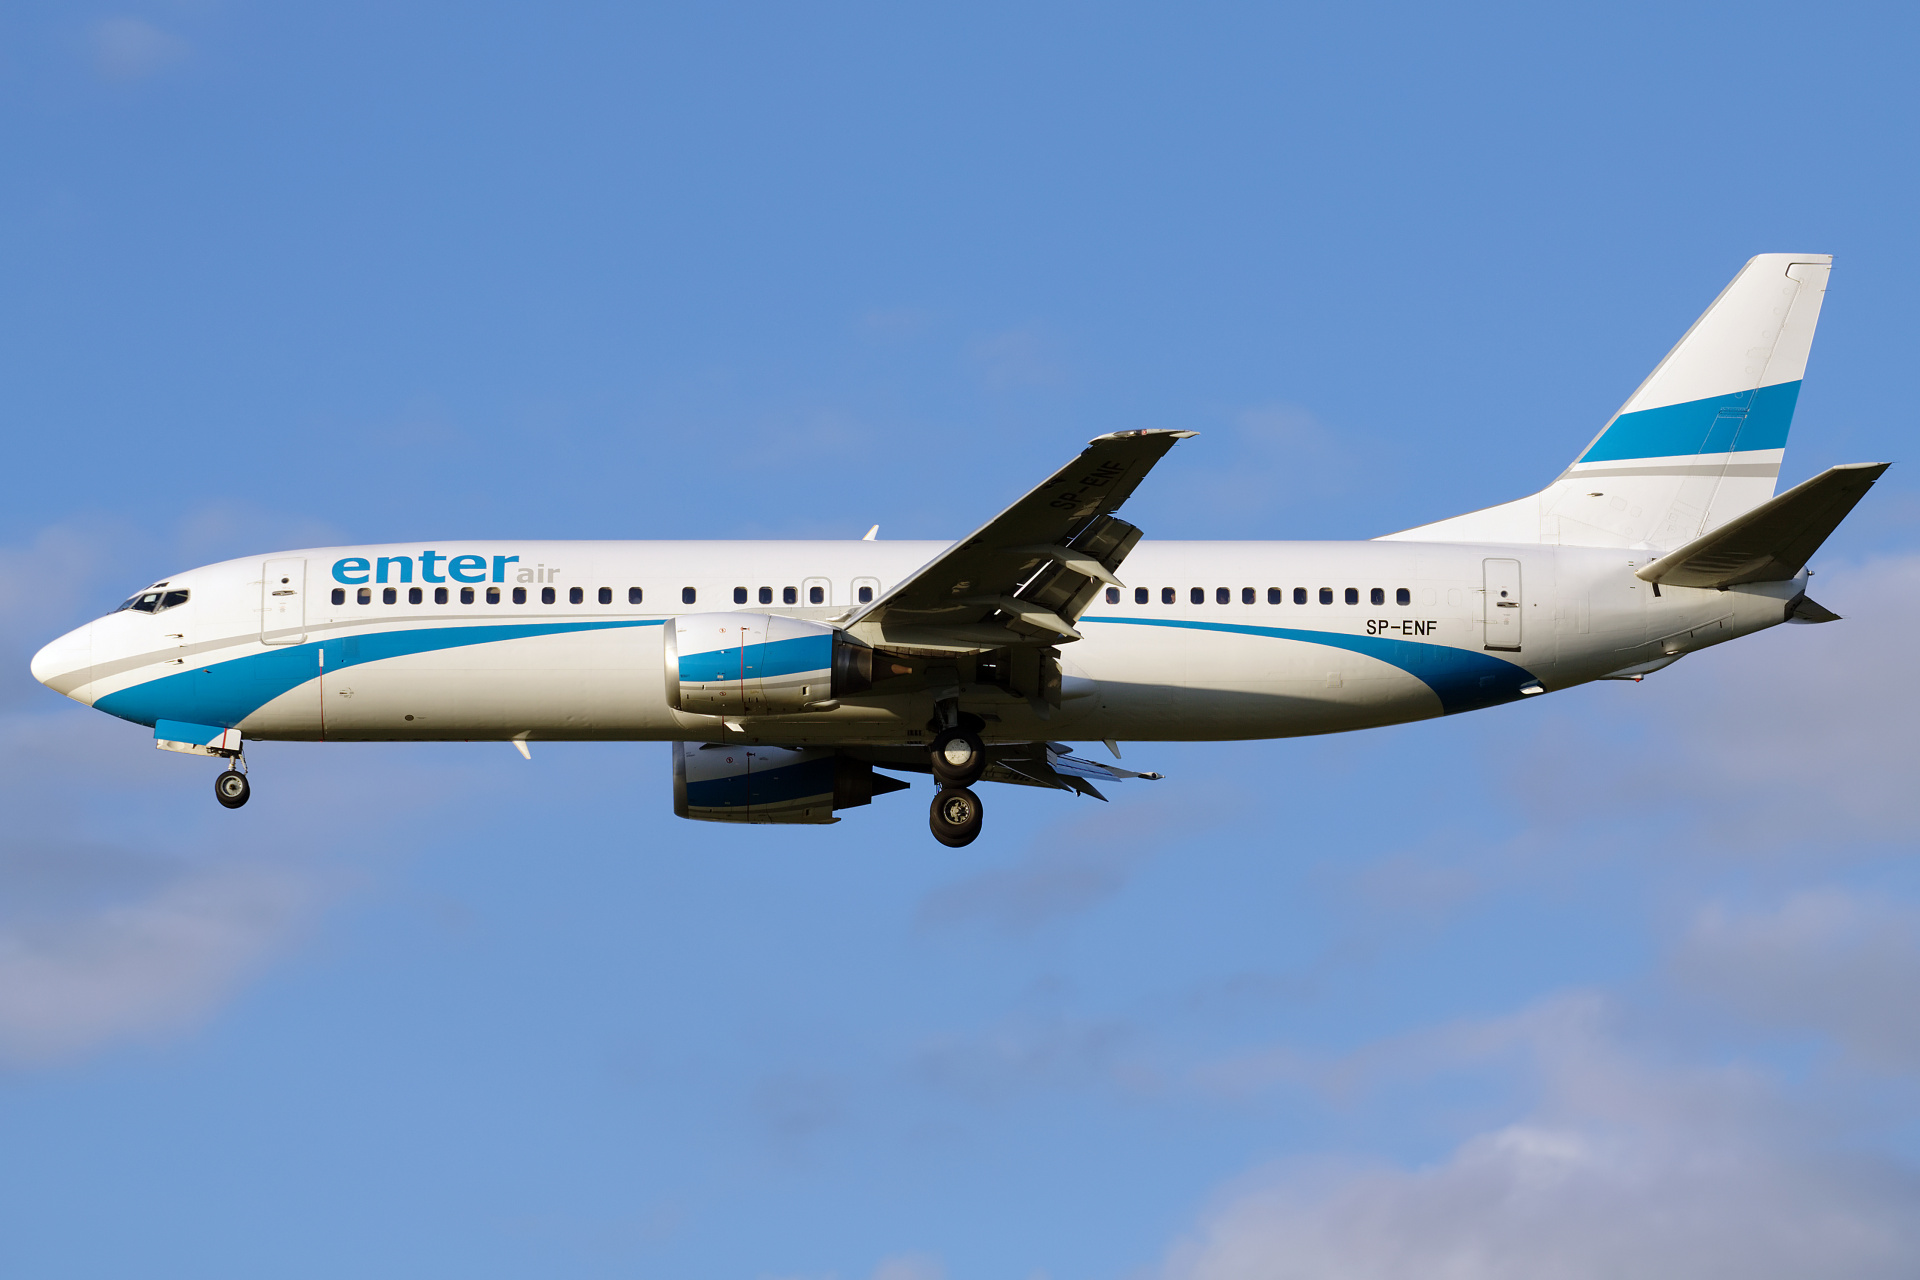 SP-ENF (Aircraft » EPWA Spotting » Boeing 737-400 » Enter Air)